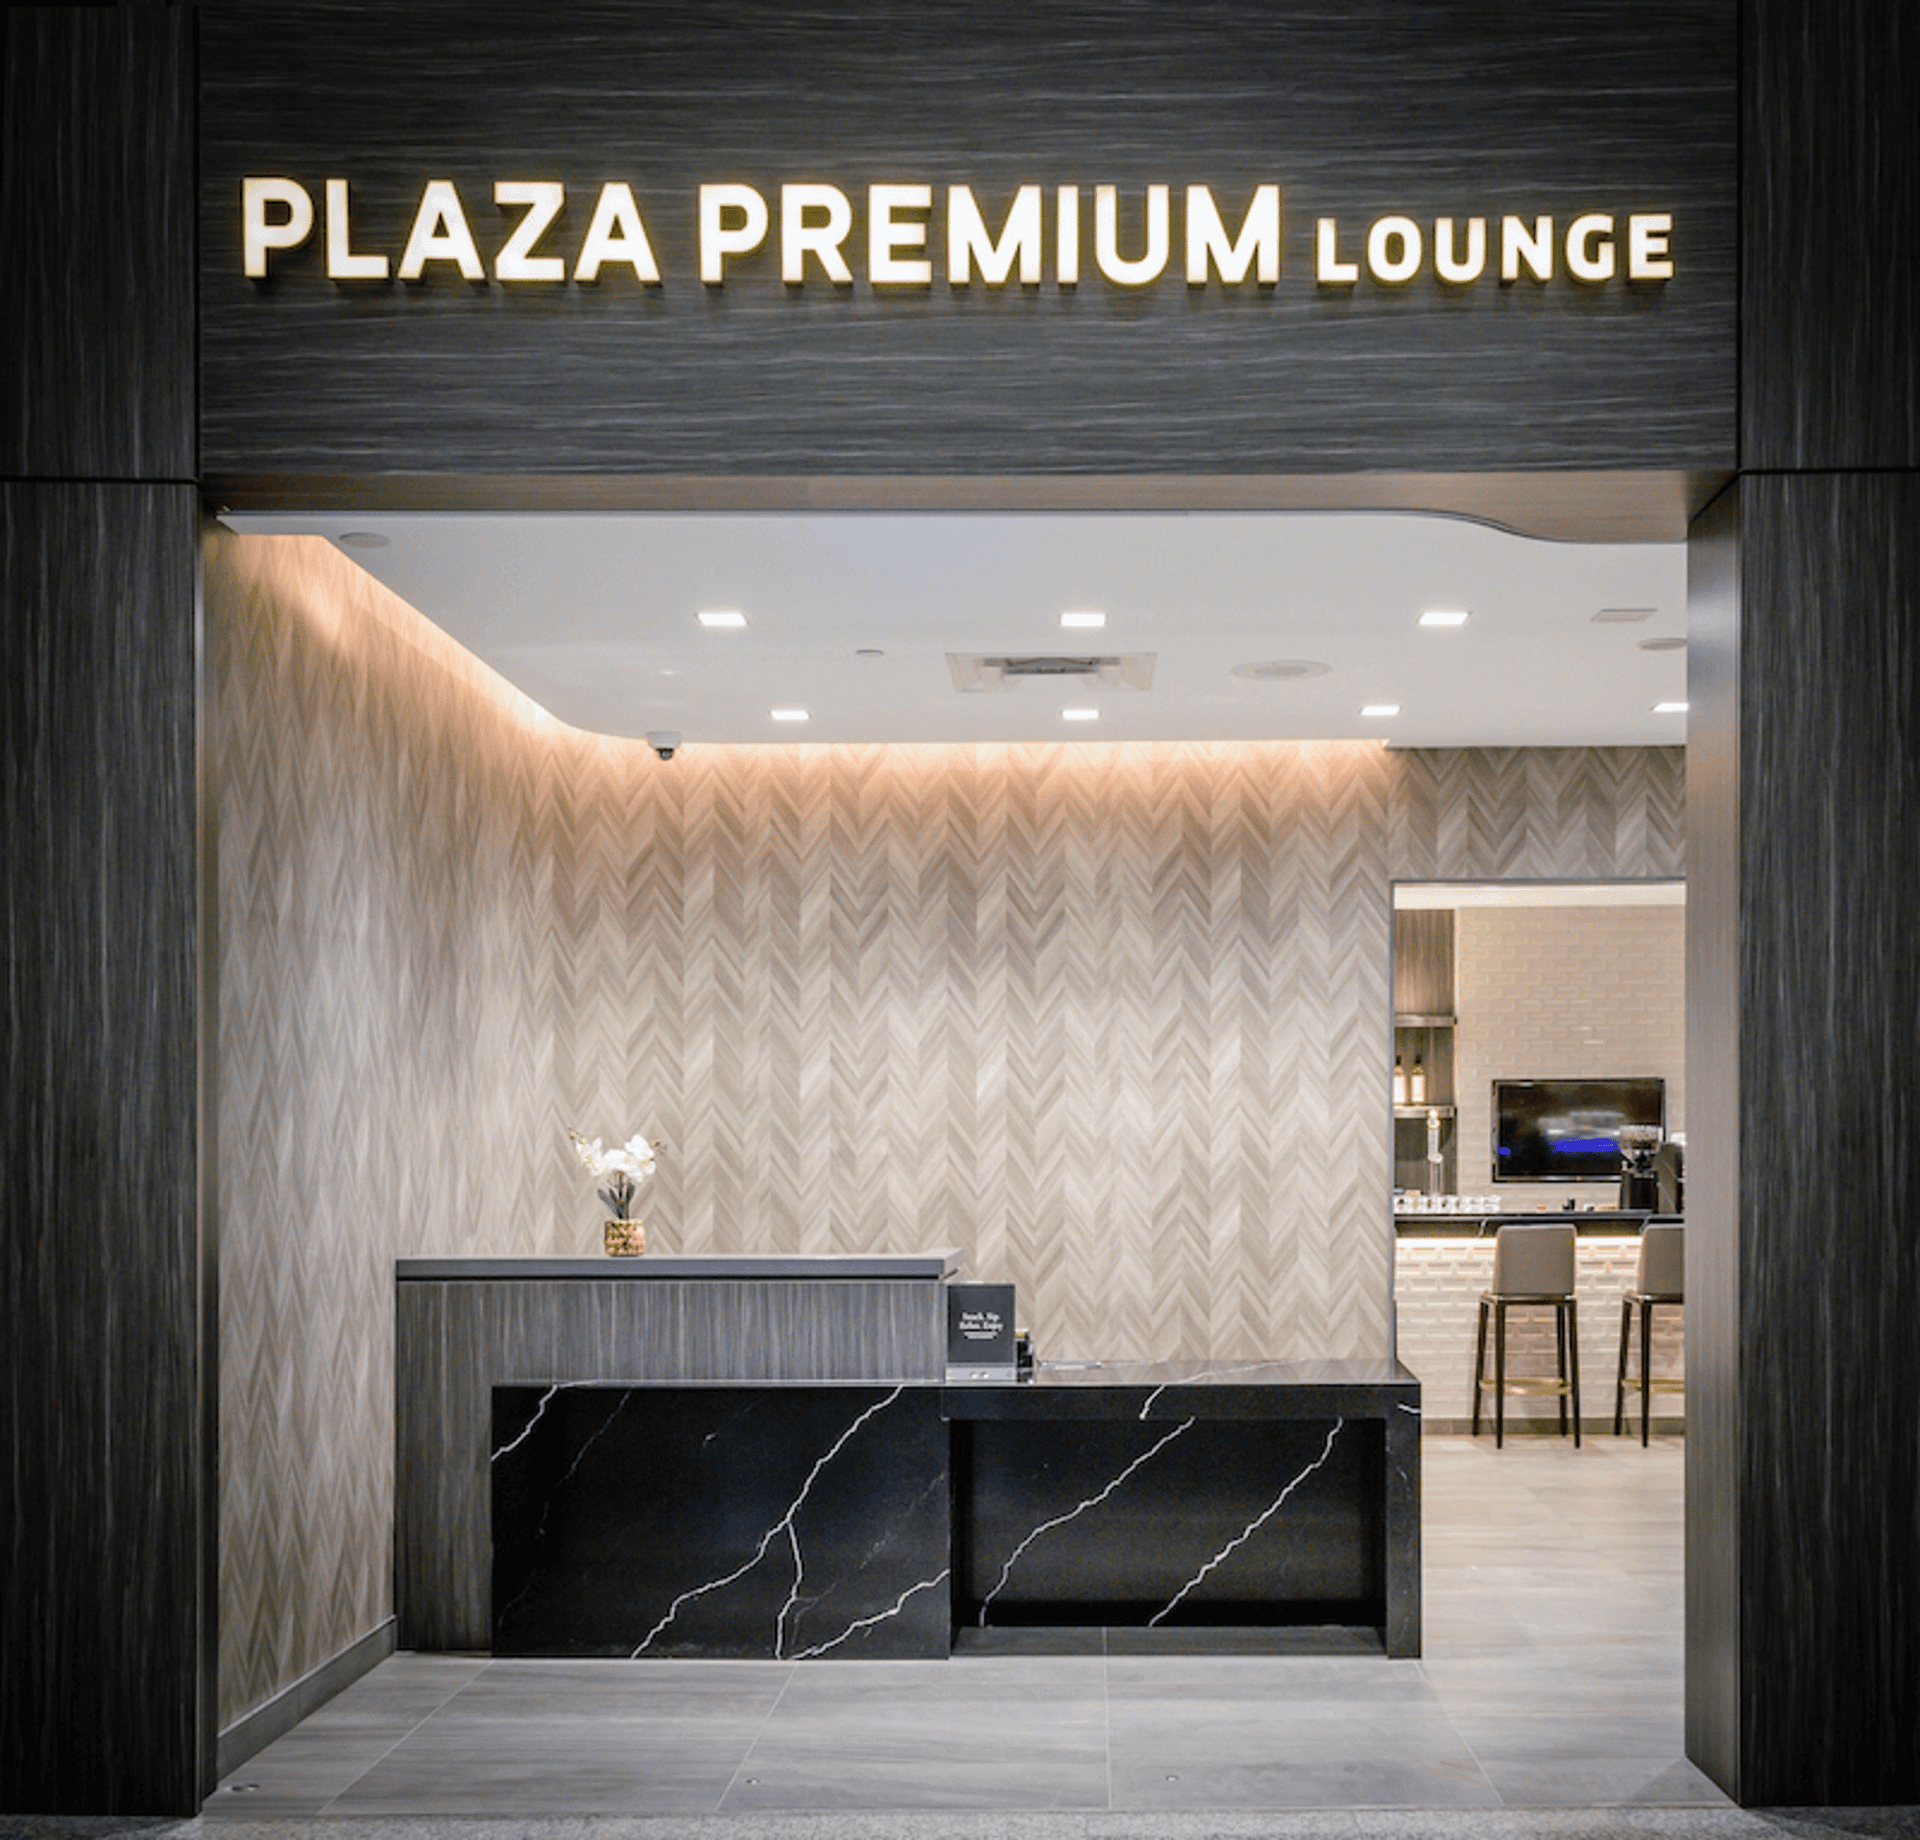 Plaza Premium Lounge image 29 of 31